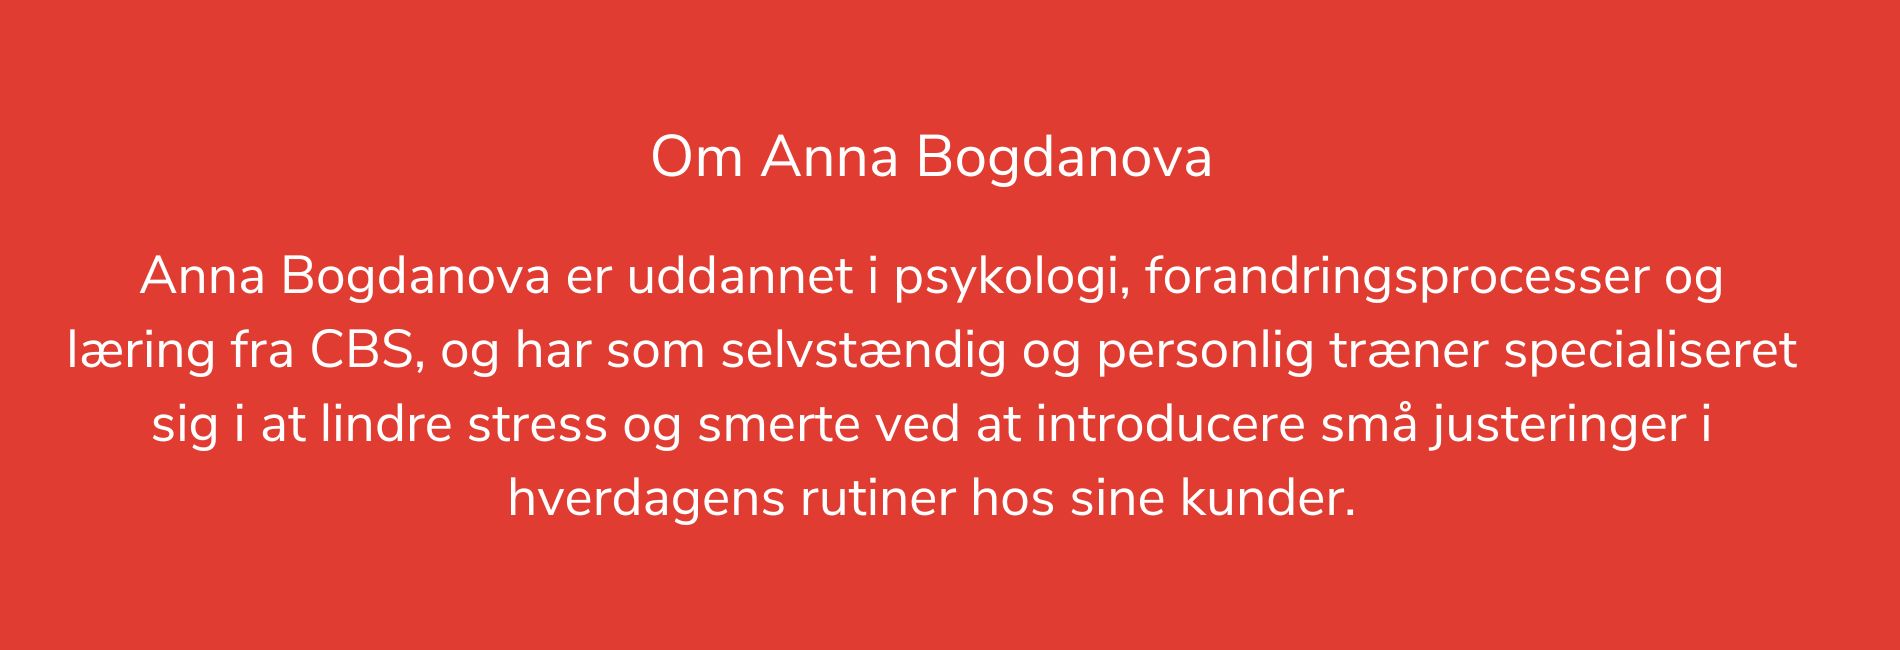 Om Anna Bogdanova